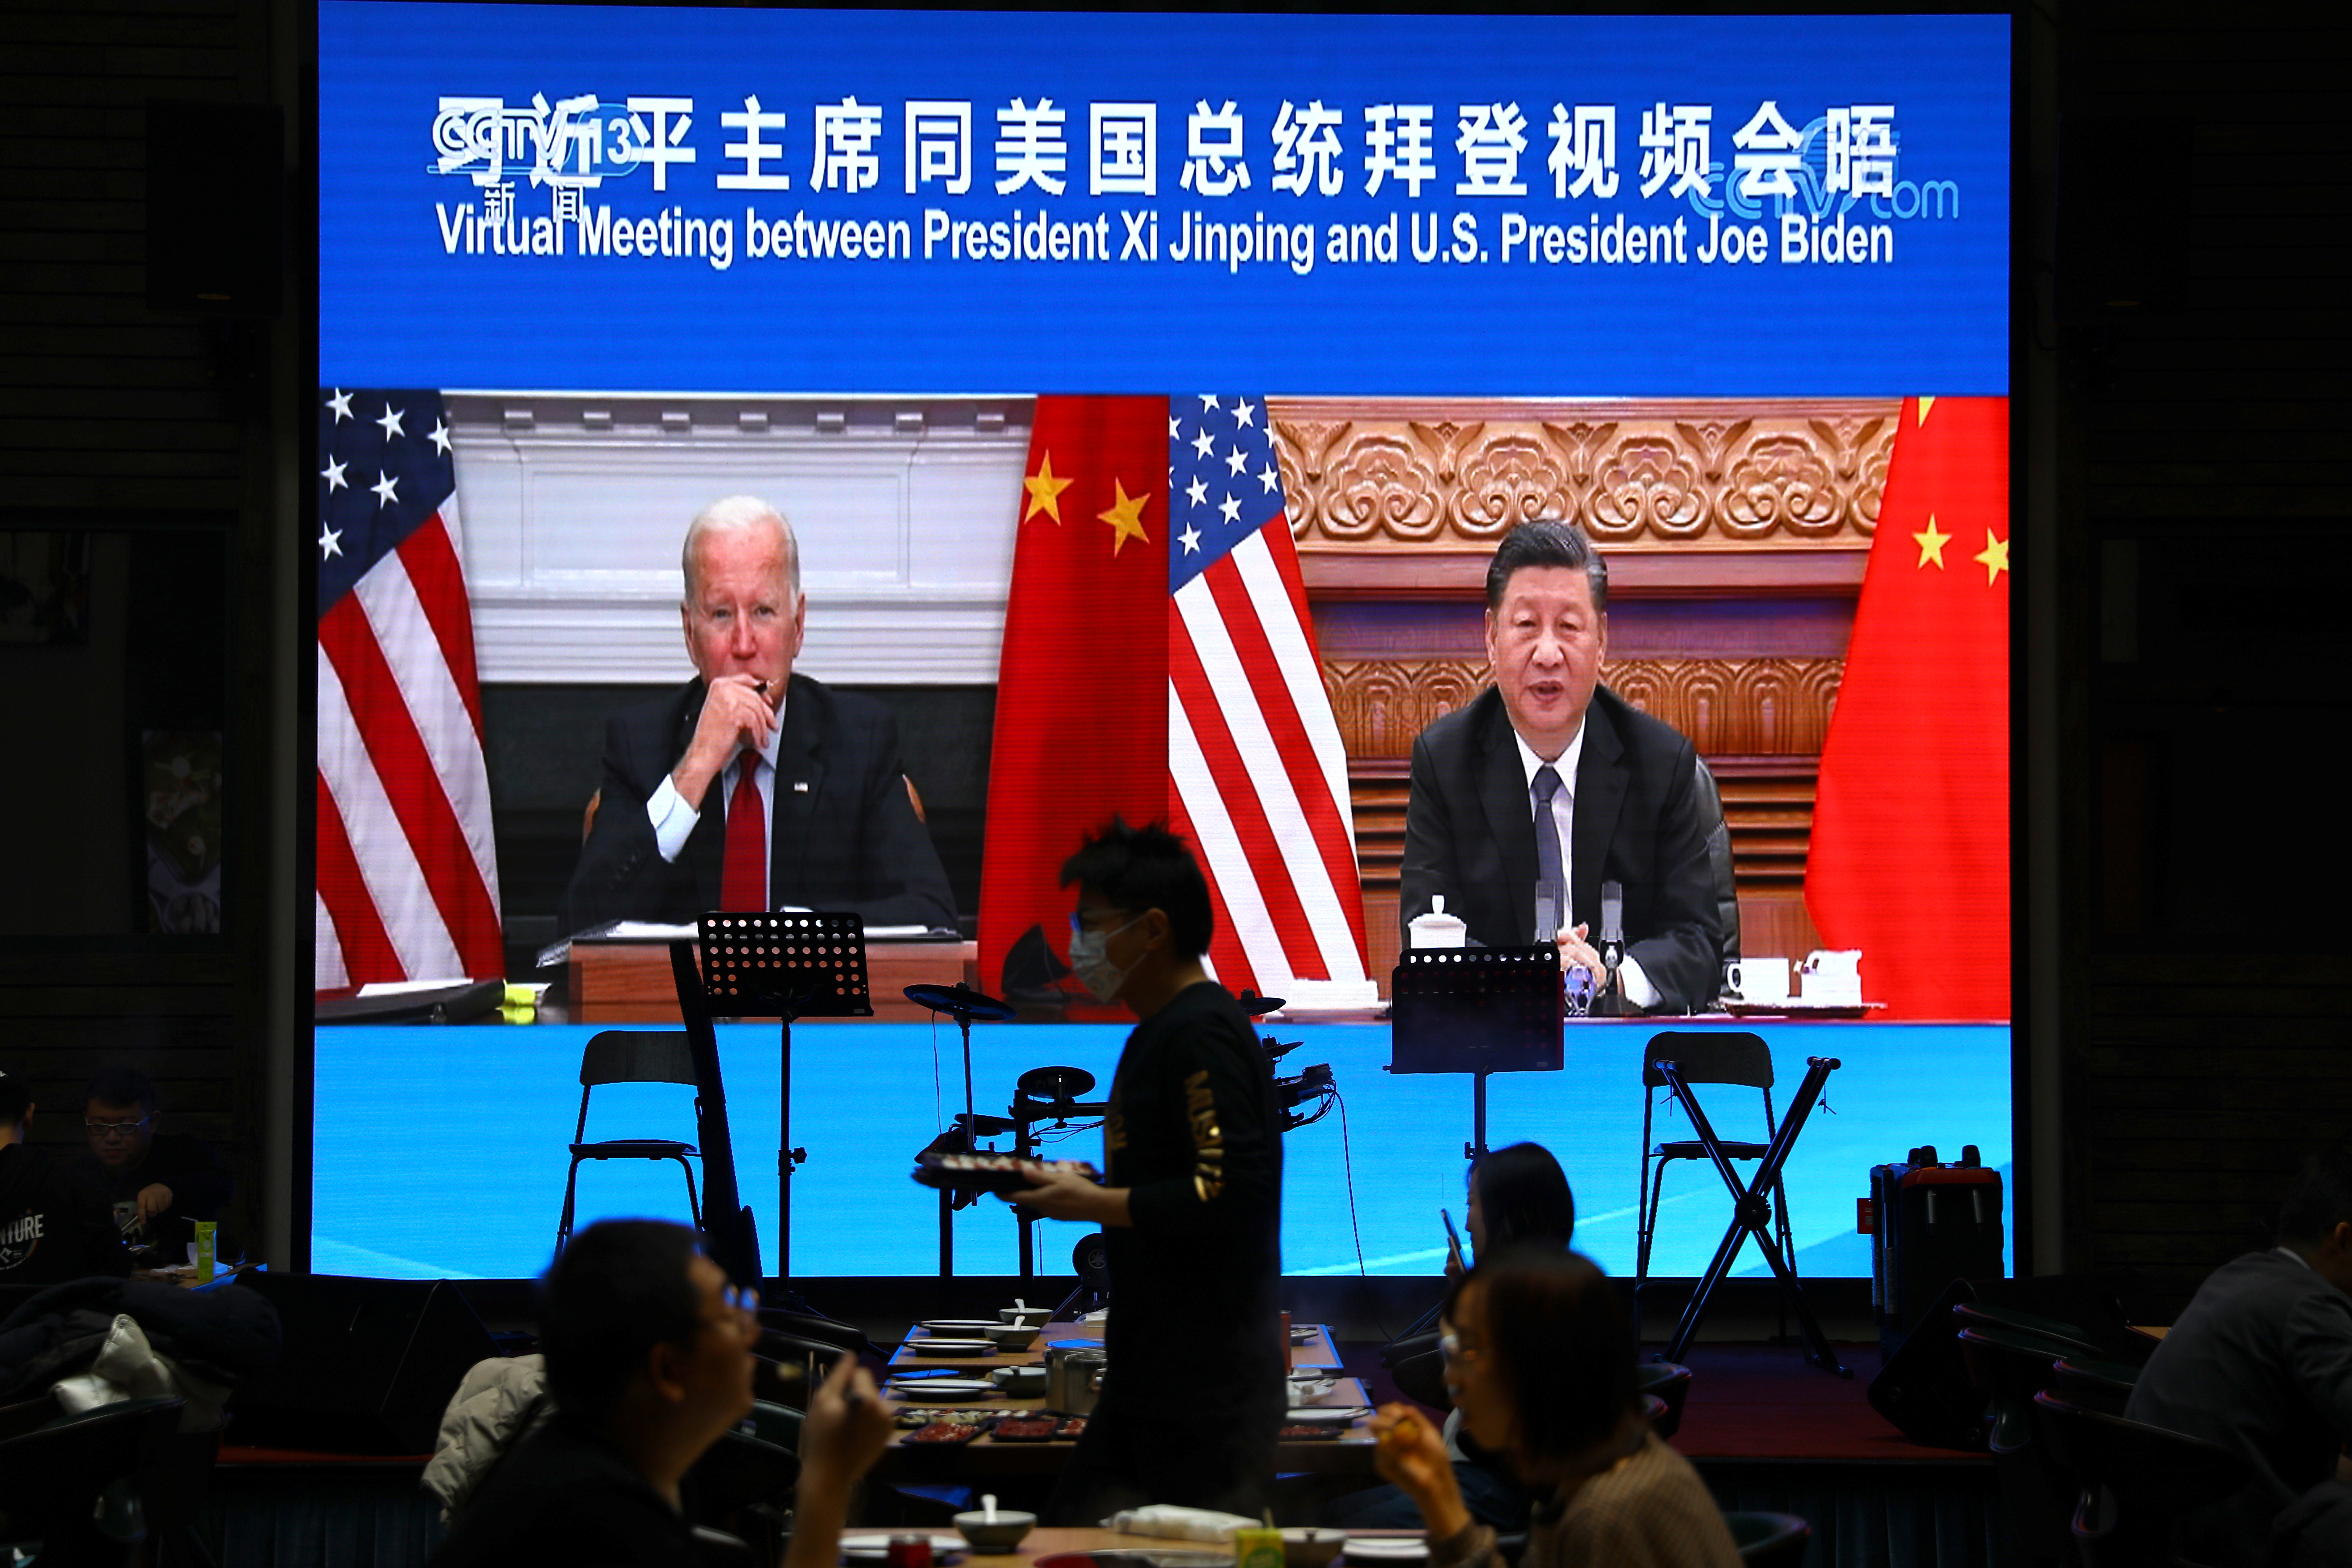 Screen shows Chinese President Xi Jinping attending a virtual meeting with U.S. President Joe Biden via video link, at a restaurant in Beijing